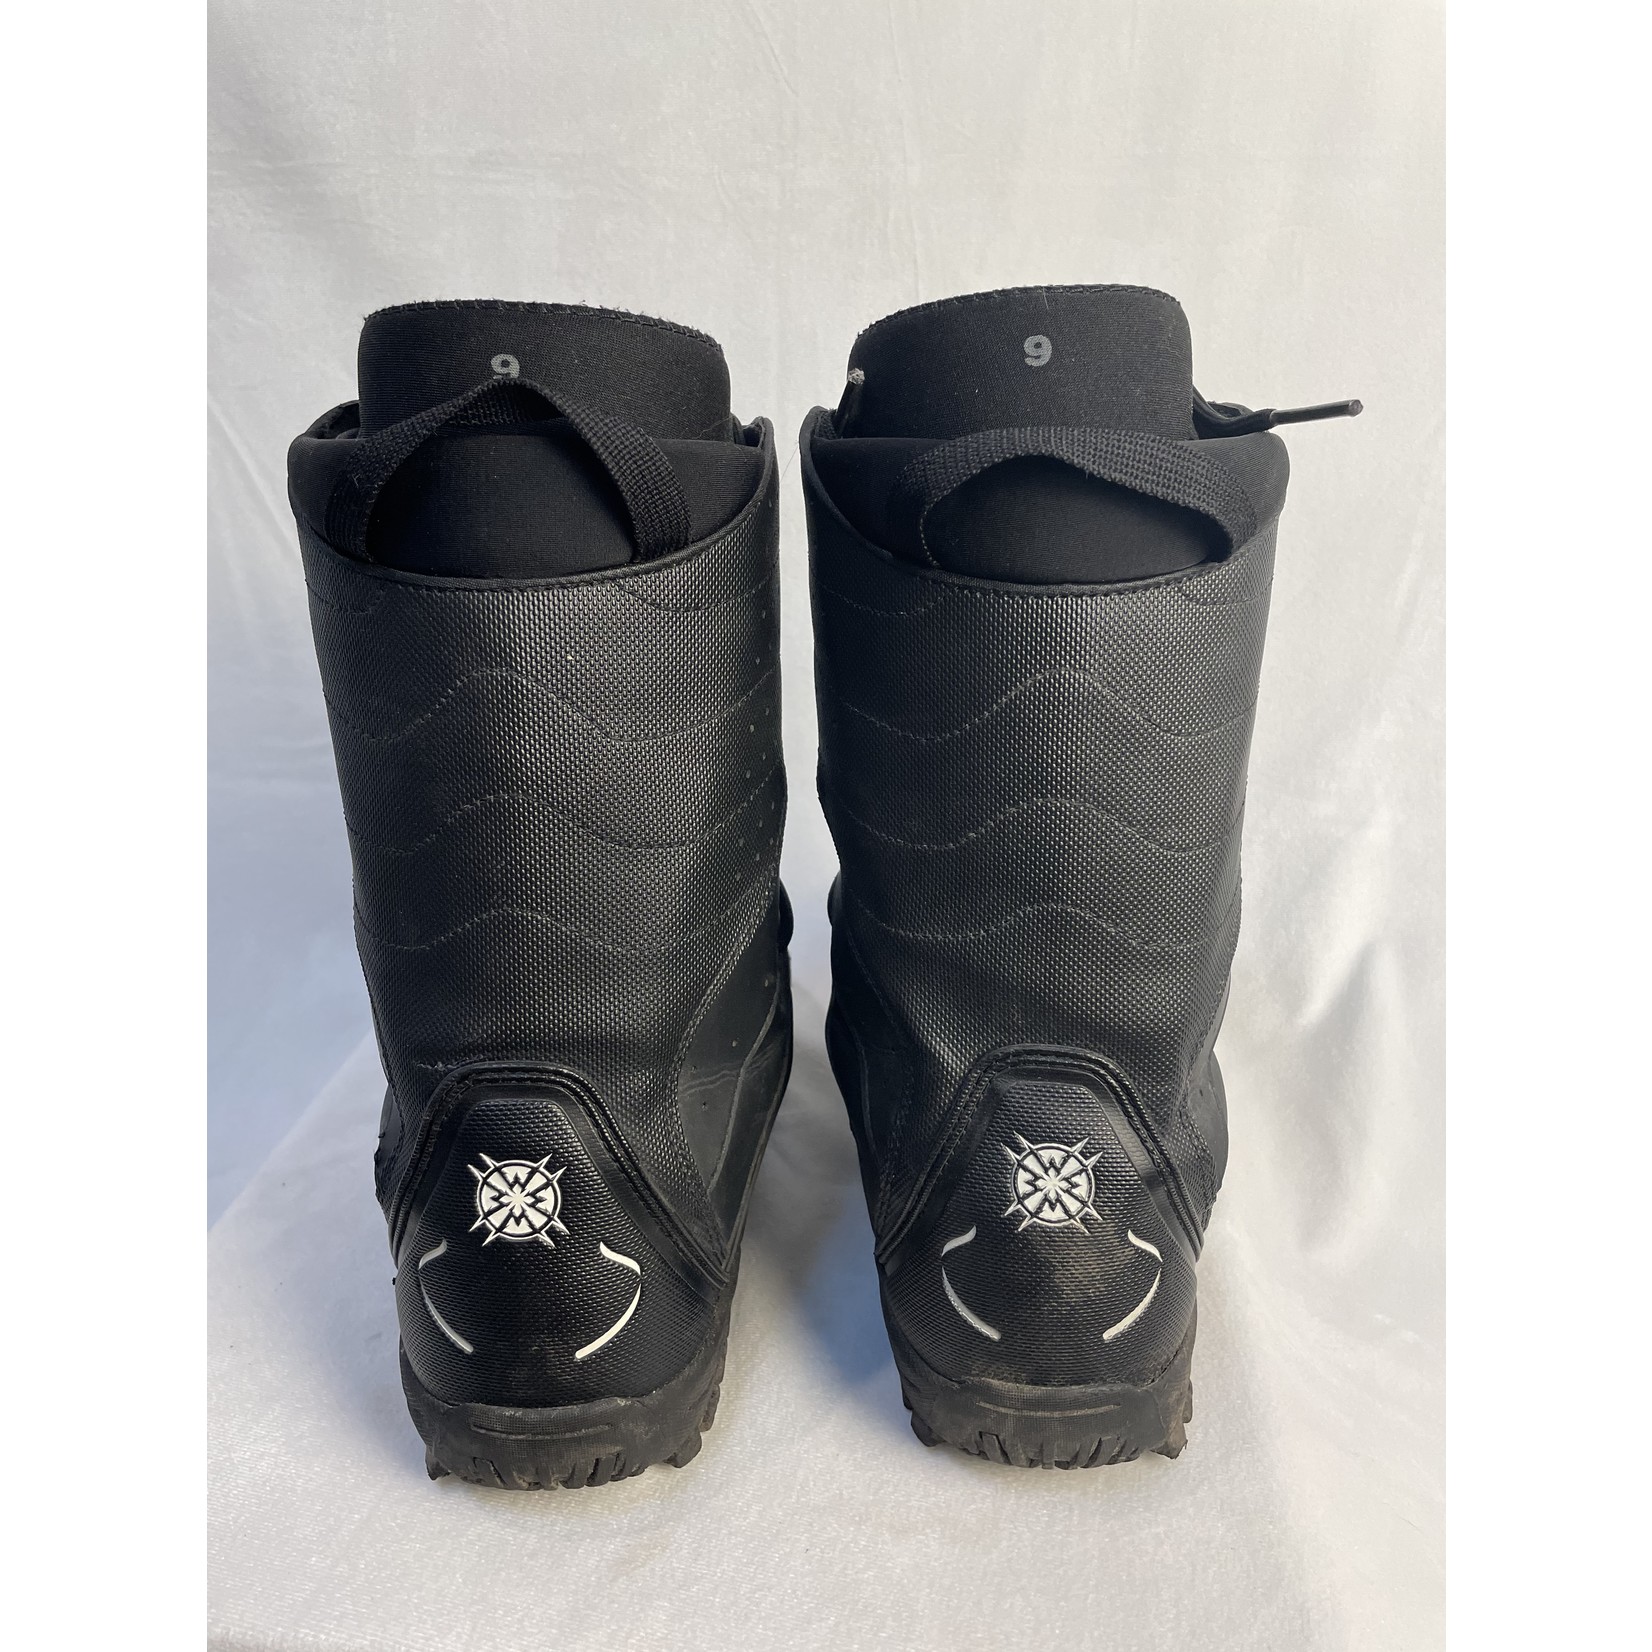 Lamar Lamar Snowboard Boots, Size 9 MENS